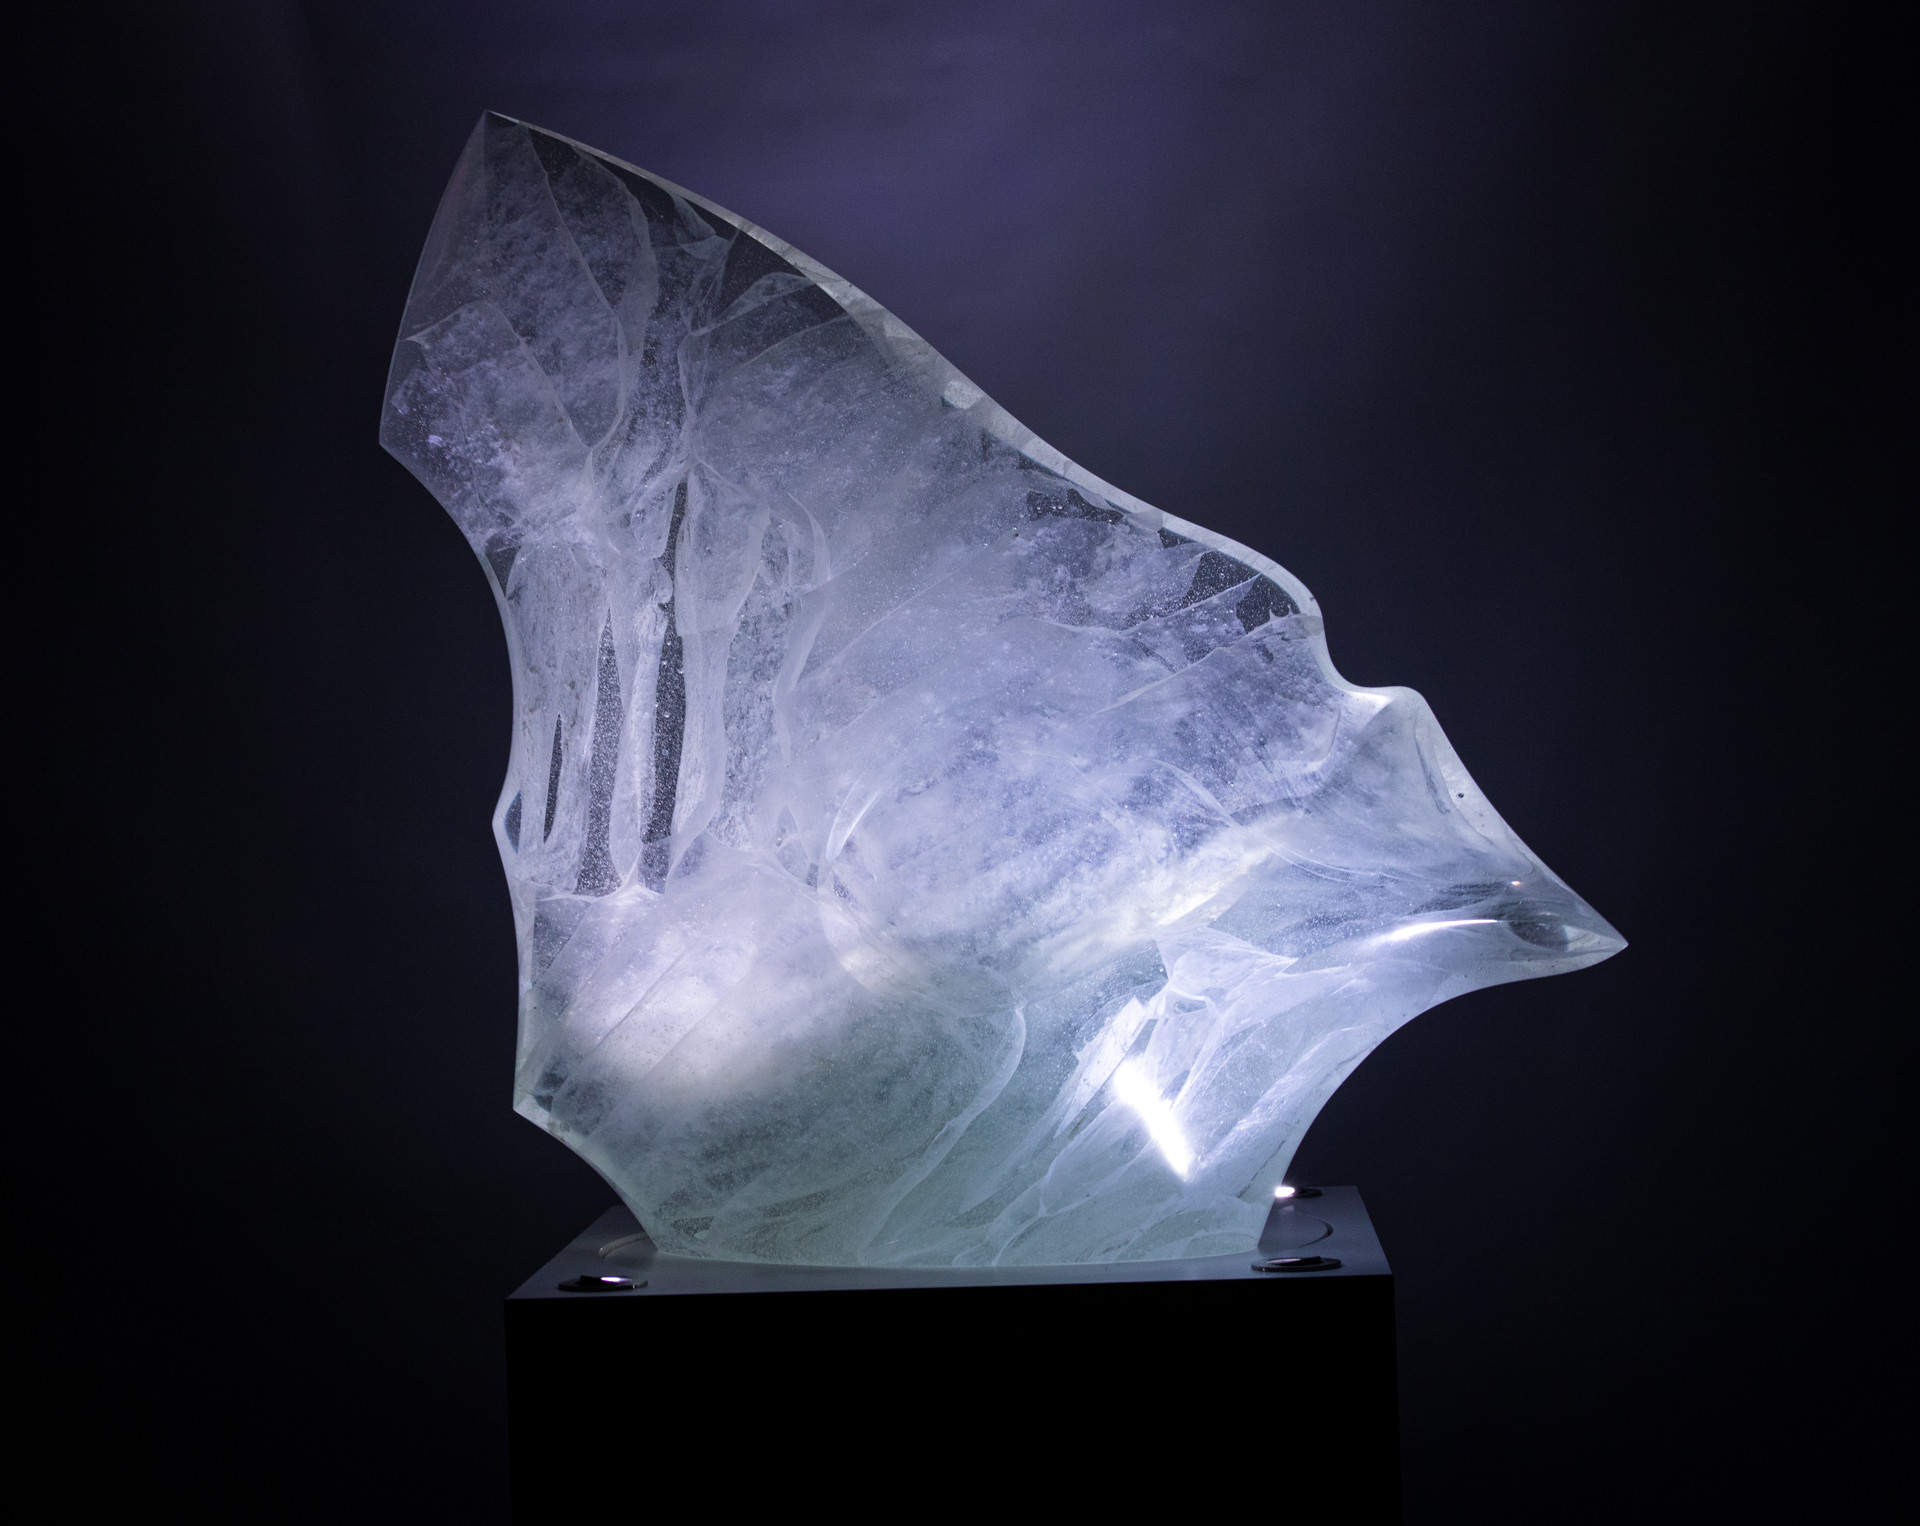 "Icebergs & Paraphernalia" by Peter Bremers